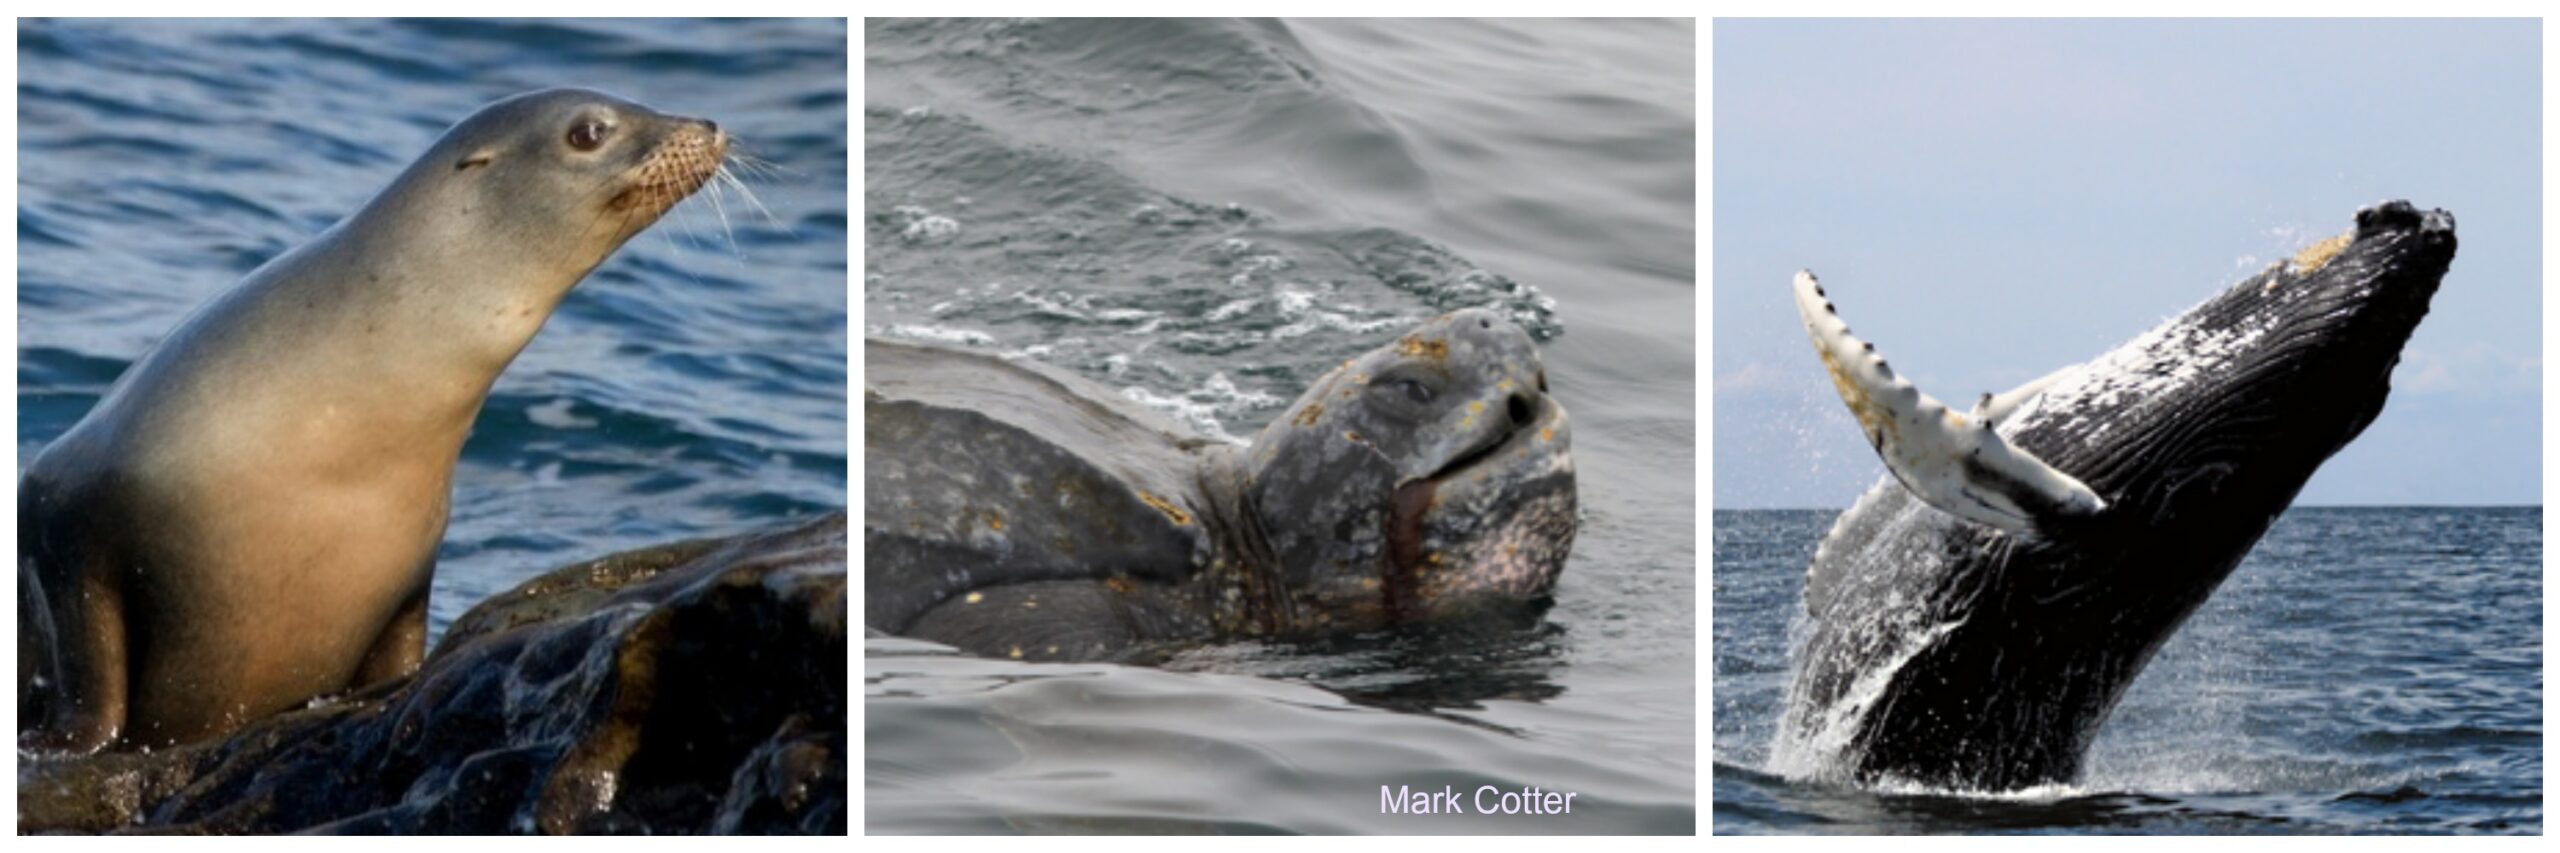 Turtle Island Calls to End California’s Driftnet Fishery